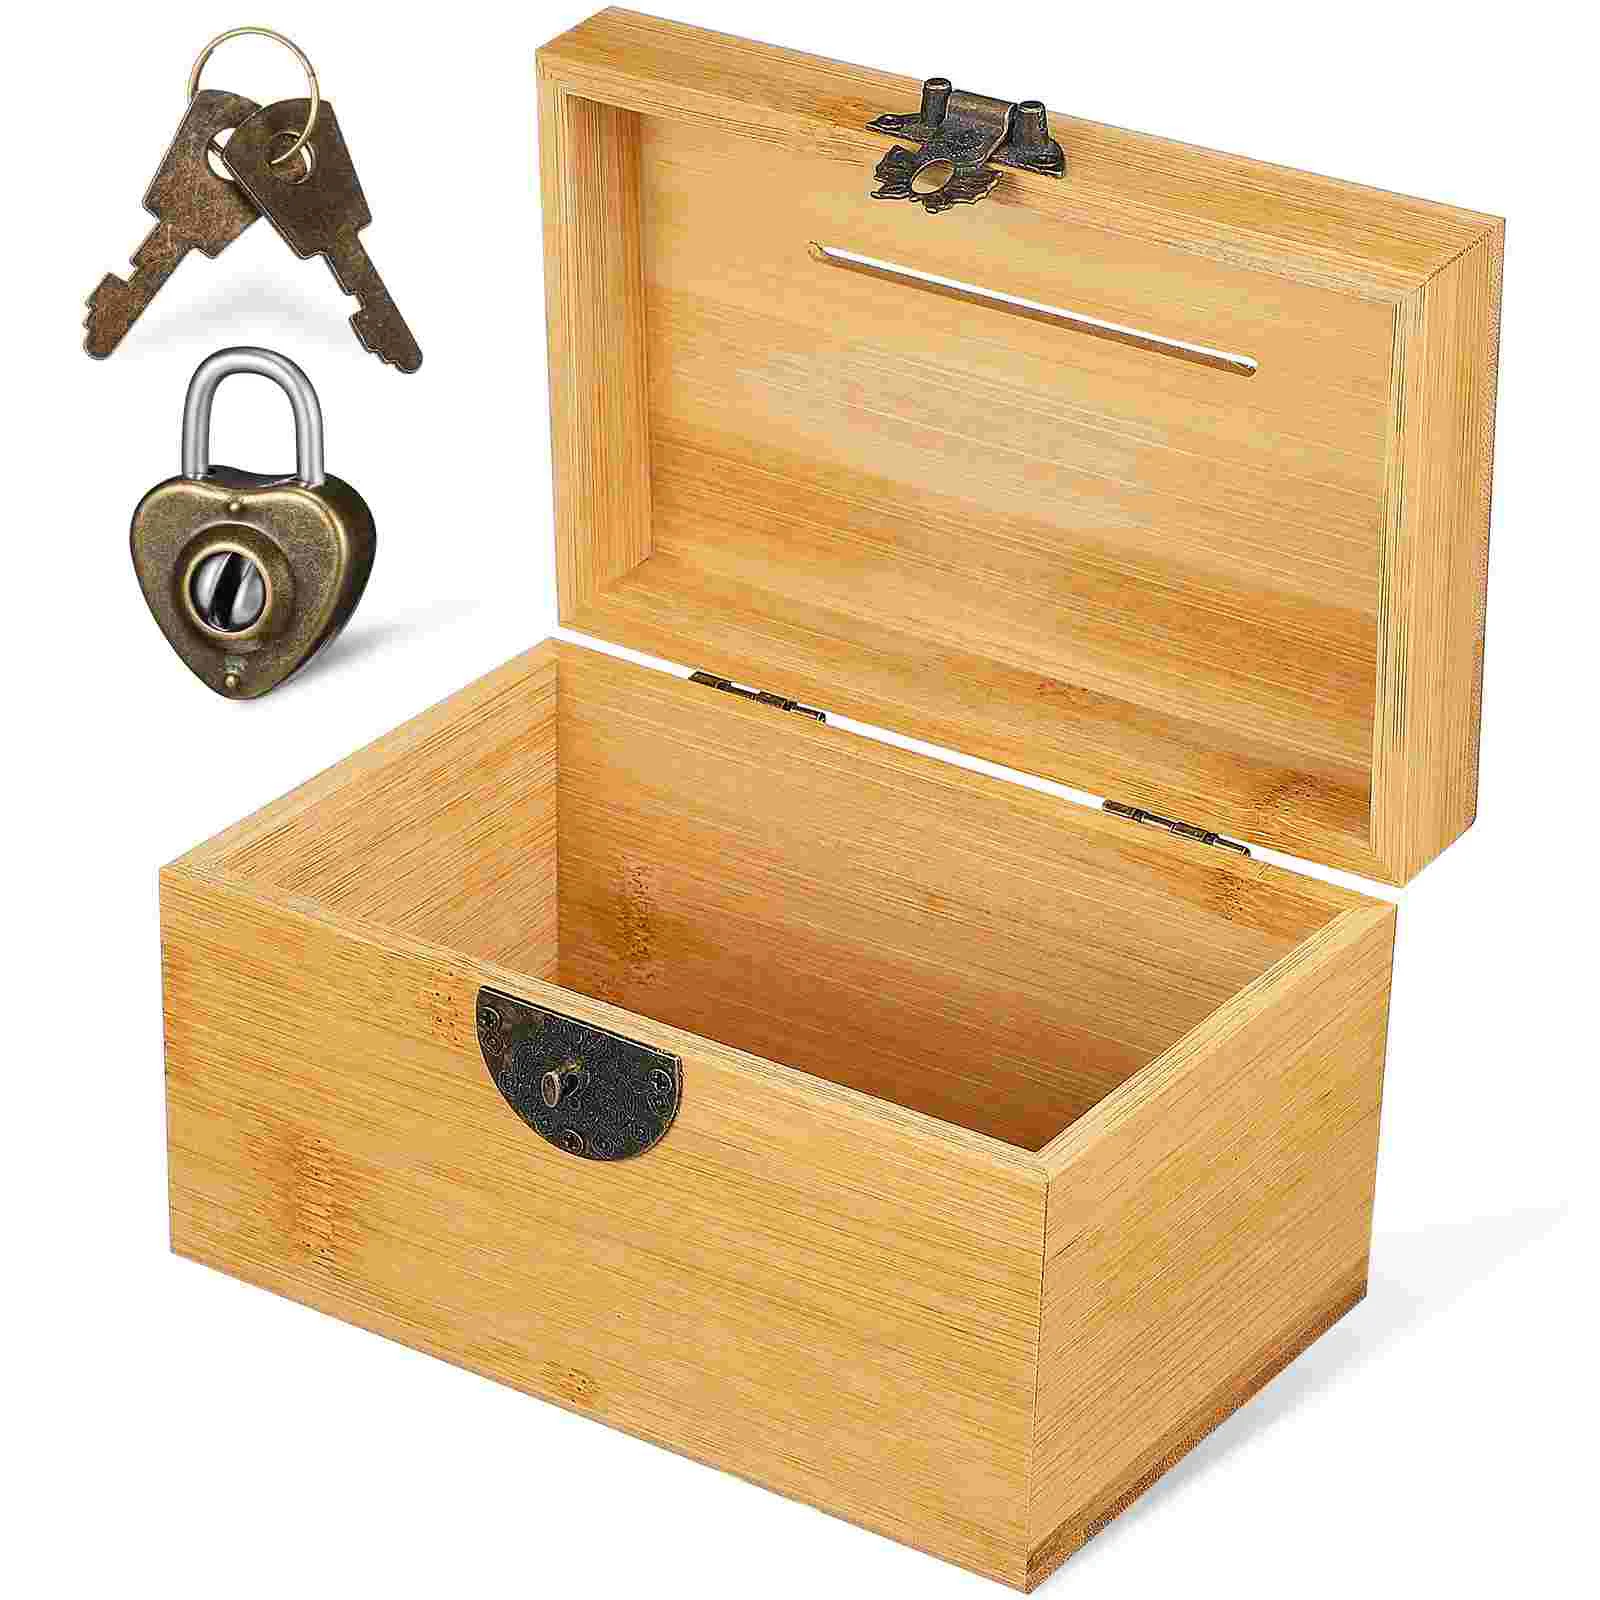 

Wooden Piggy Bank Vintage Treasure Chest Storage Box Lock Keys Decorative Money Saving Box Retro Home Decor Party Gifts